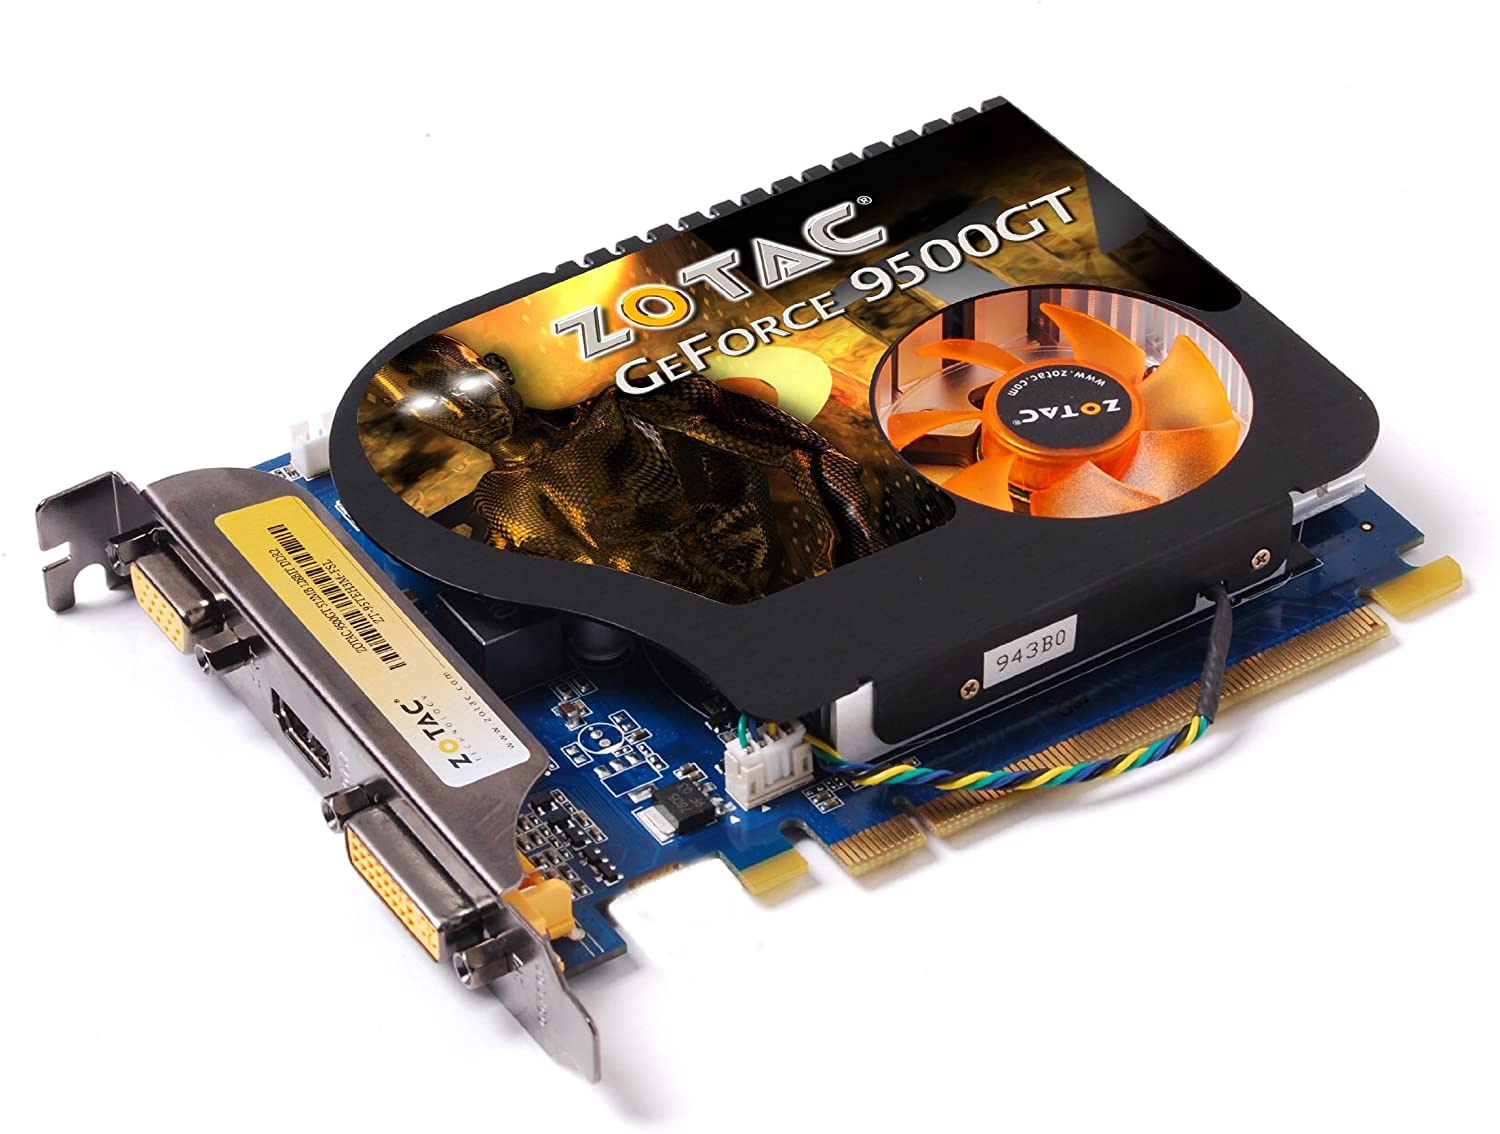 Increase hashrate Geforce 9500 GT Mining